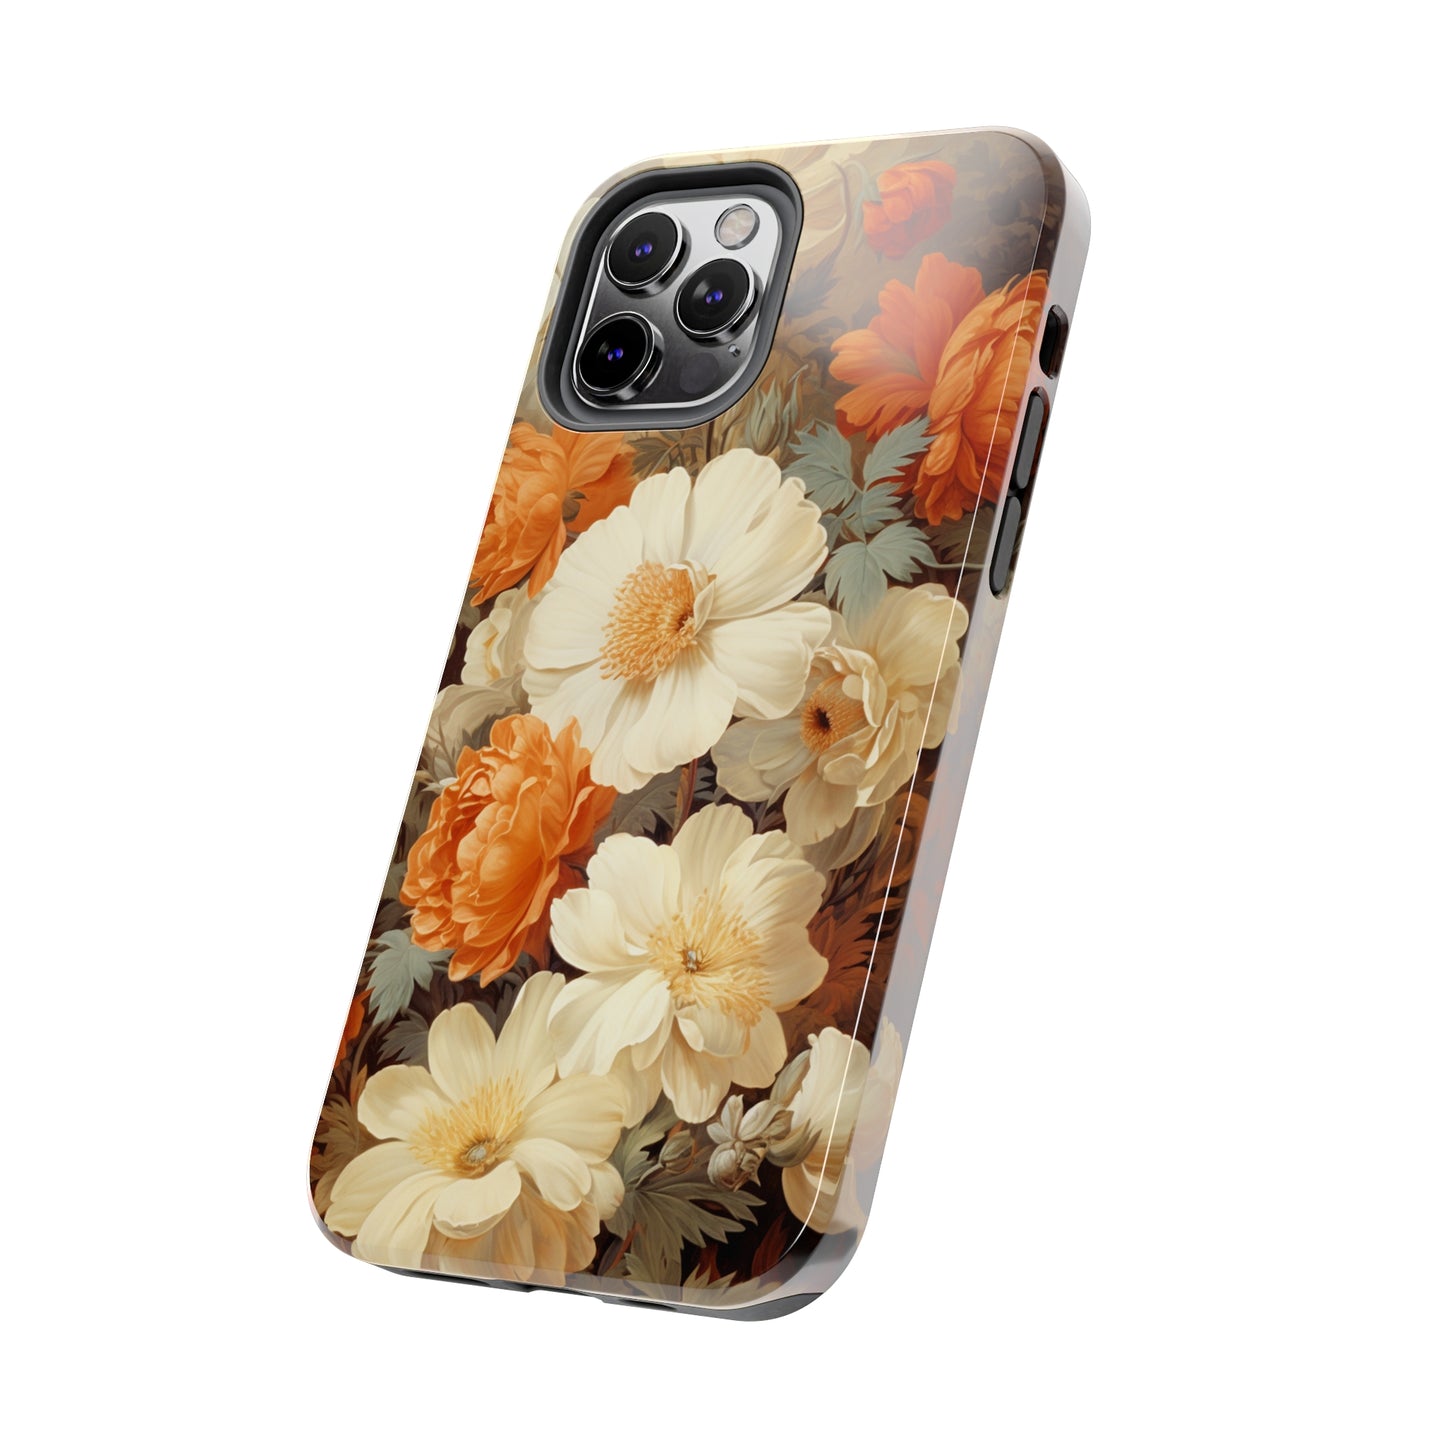 Flower iPhone case